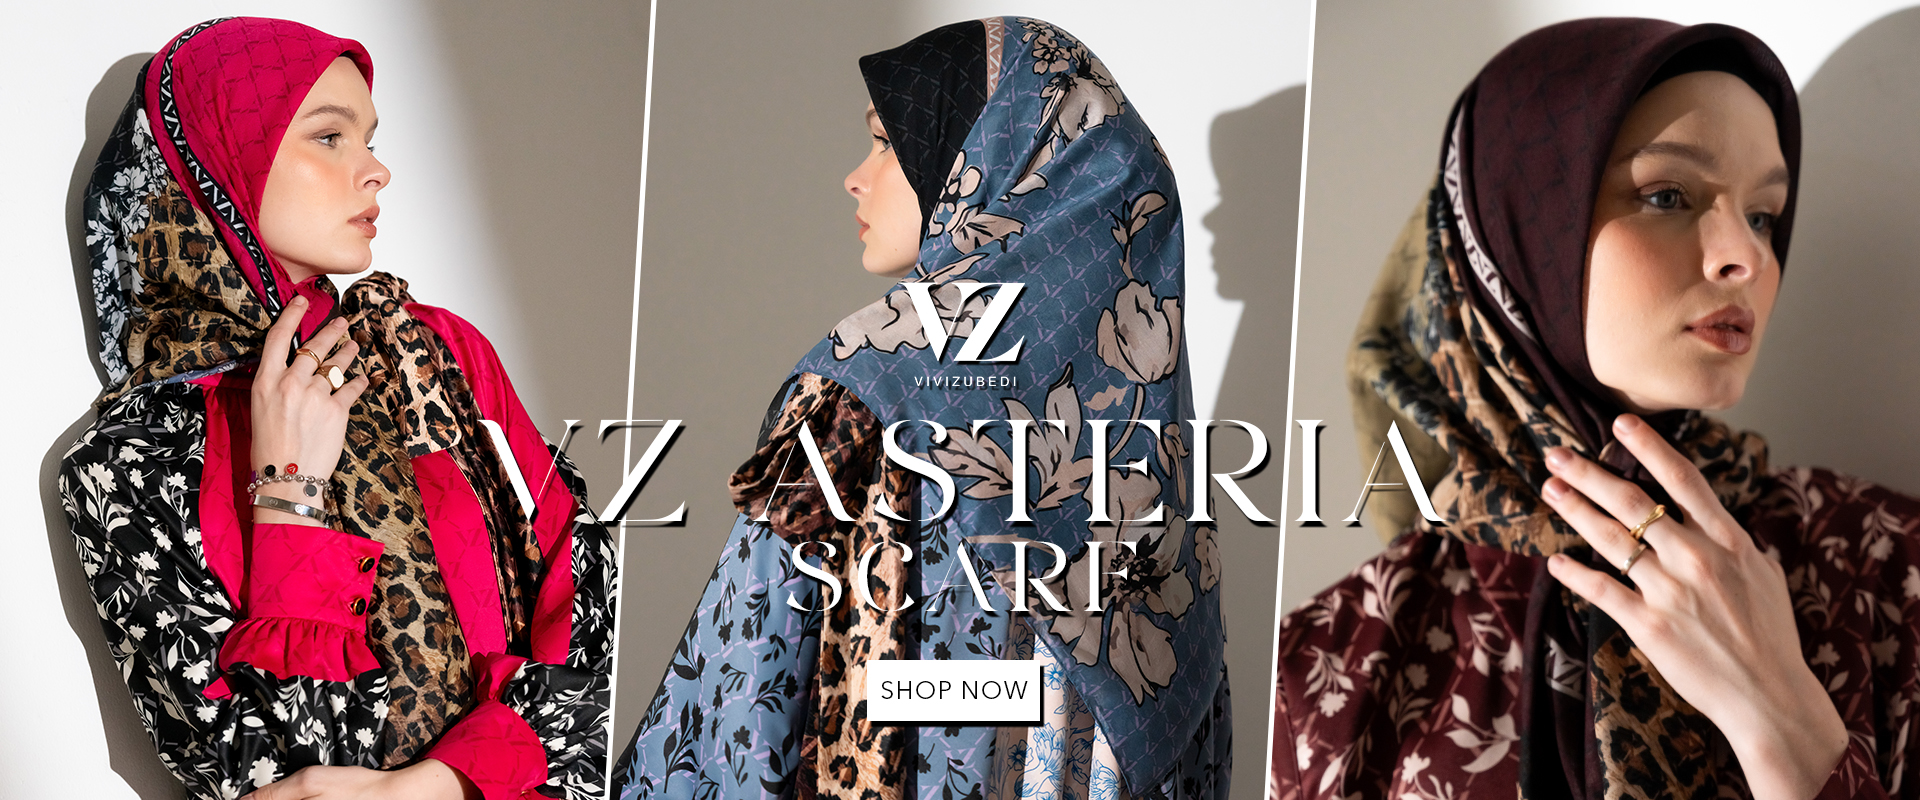 banner web VZ asteria scarf